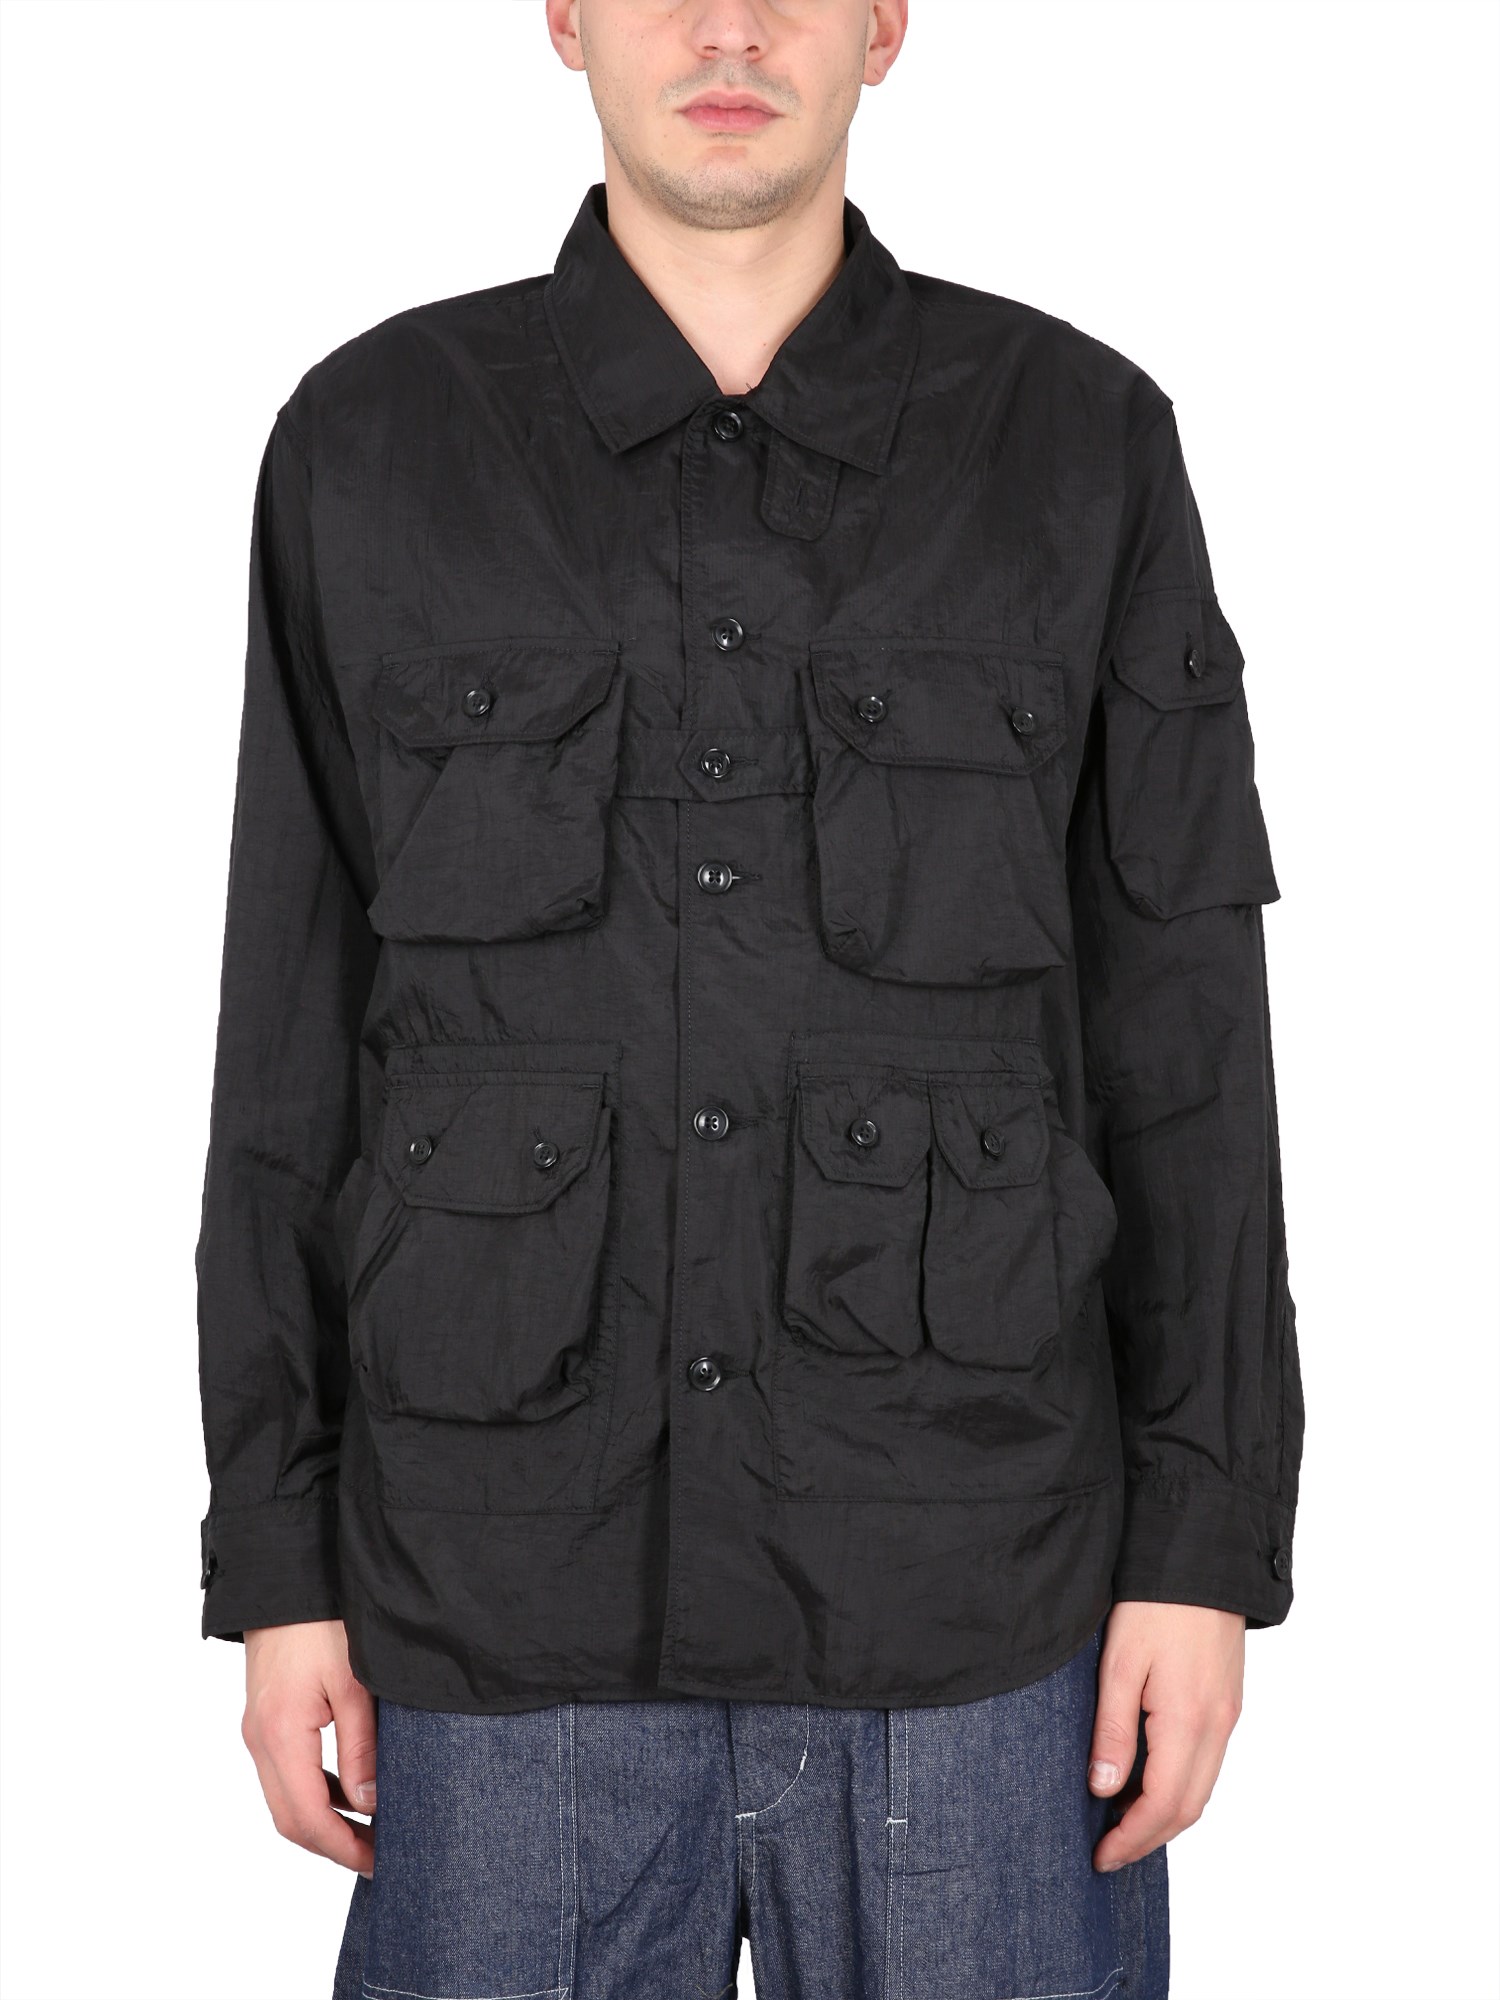 Engineered Garments Explorer Shirt Jacket Black Flight Satin Nylon